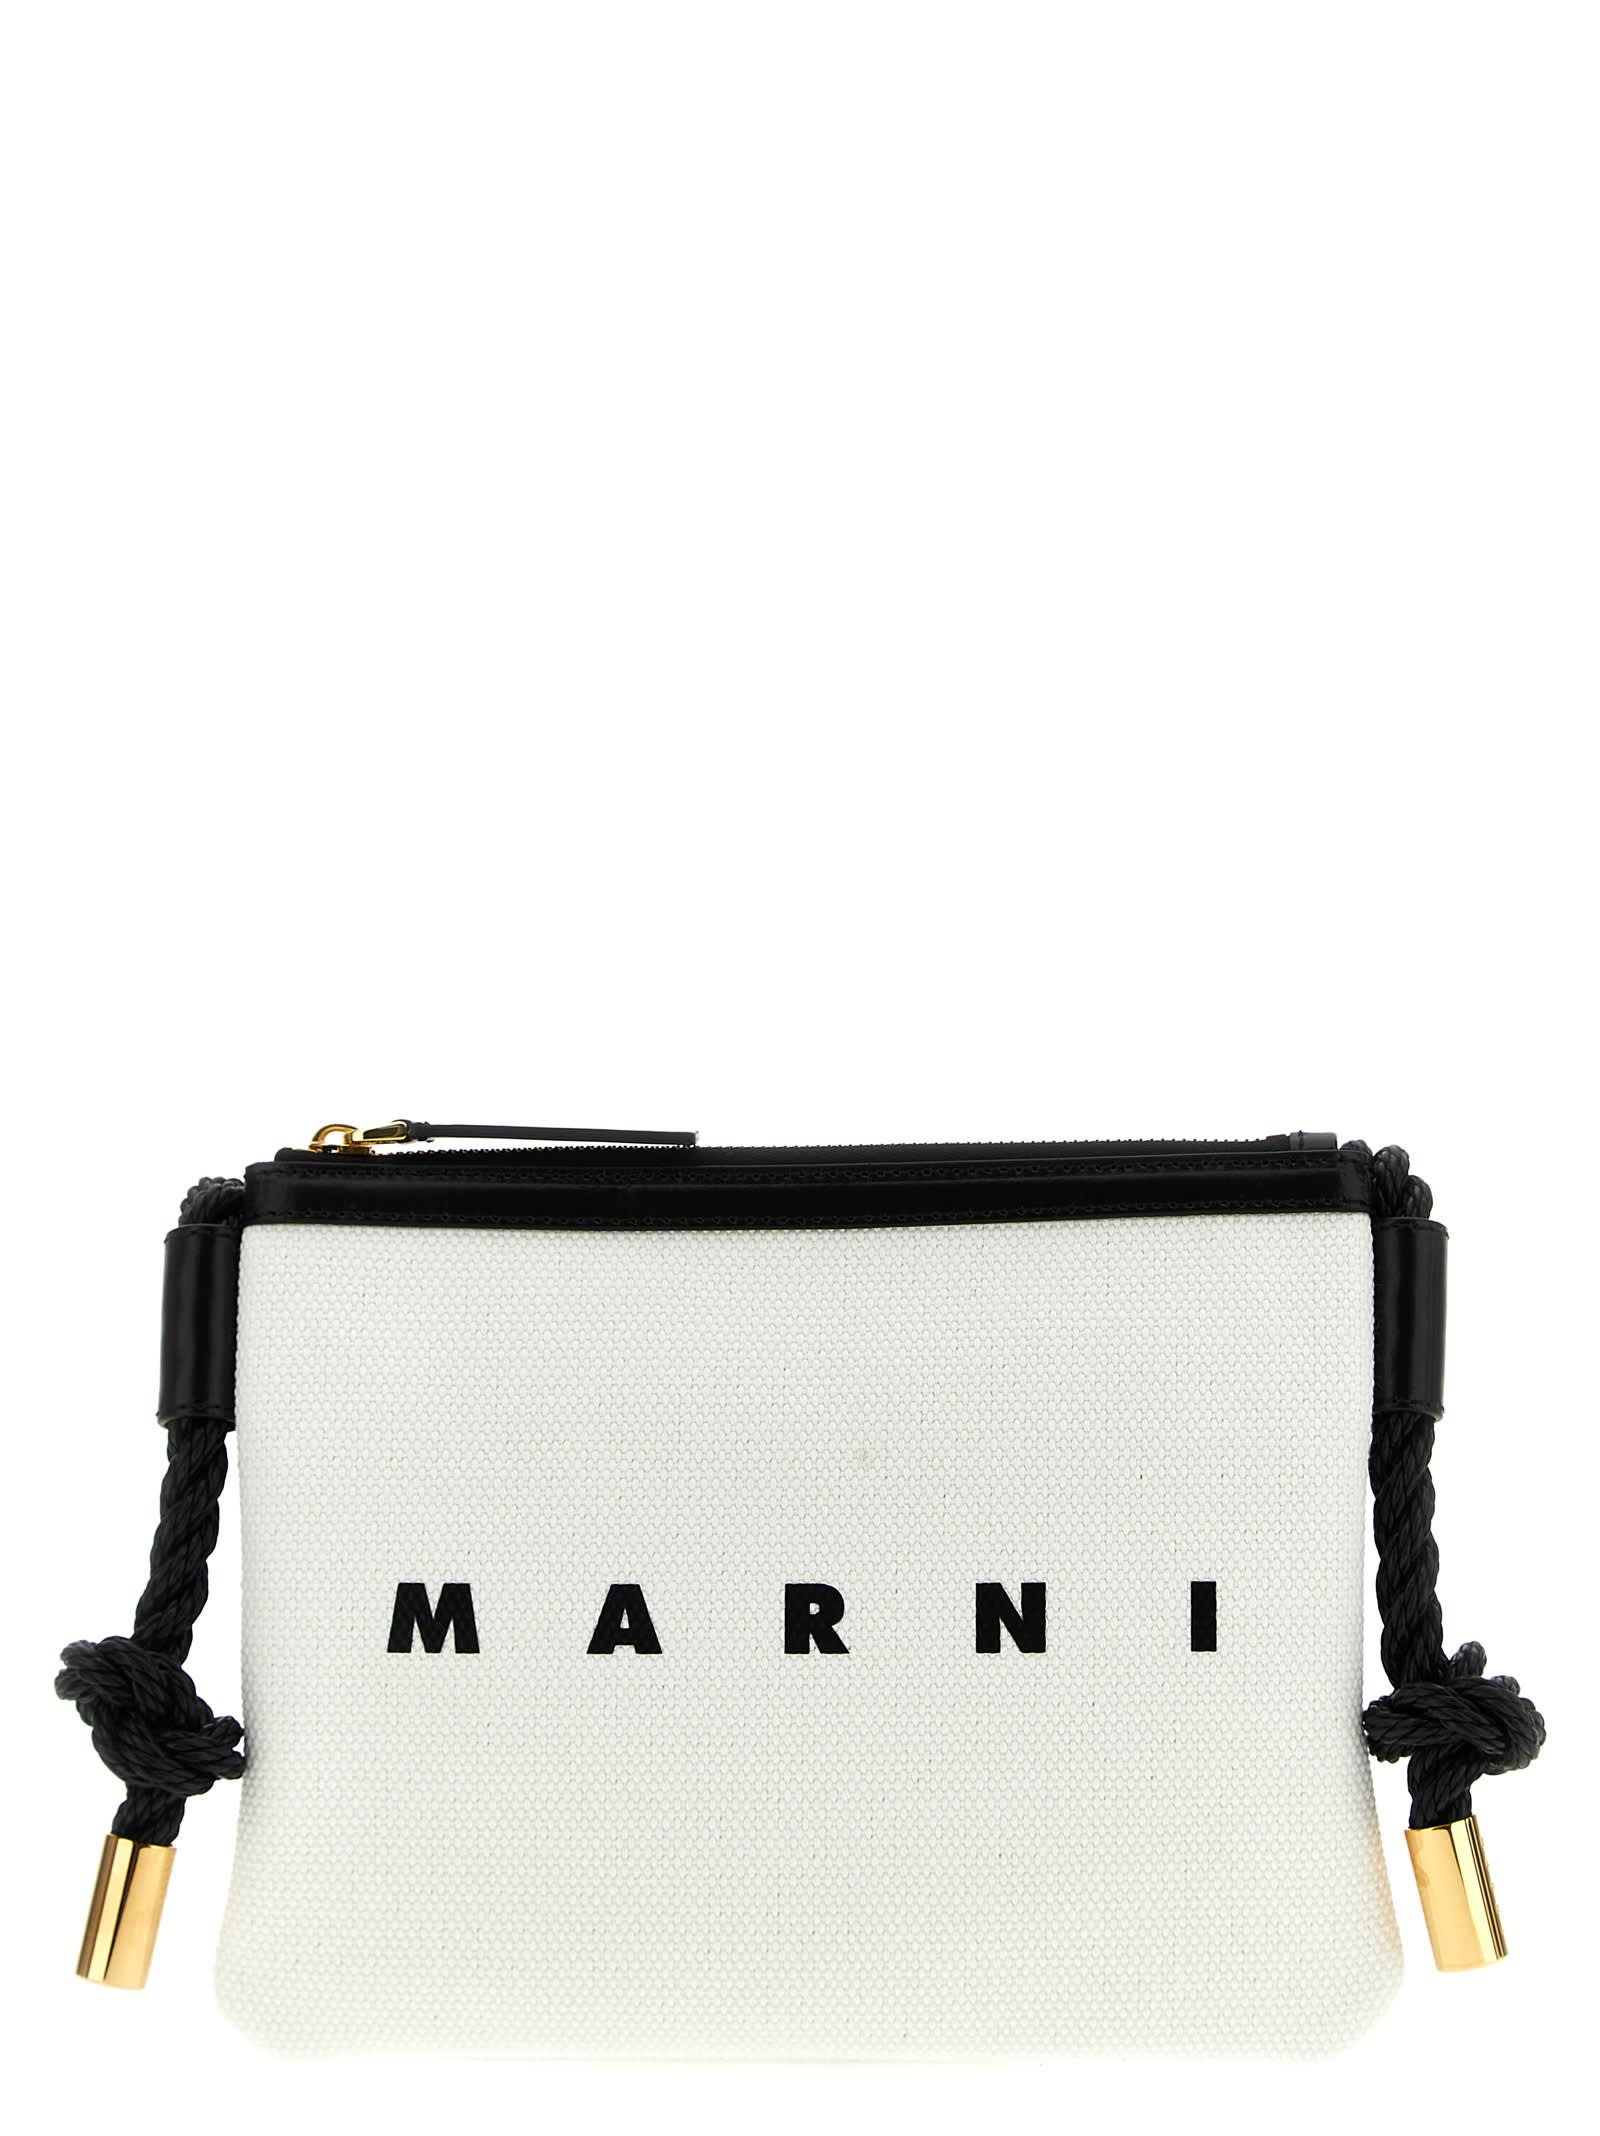 Marni Logo Print Canvas Crossbody Bag In White/black